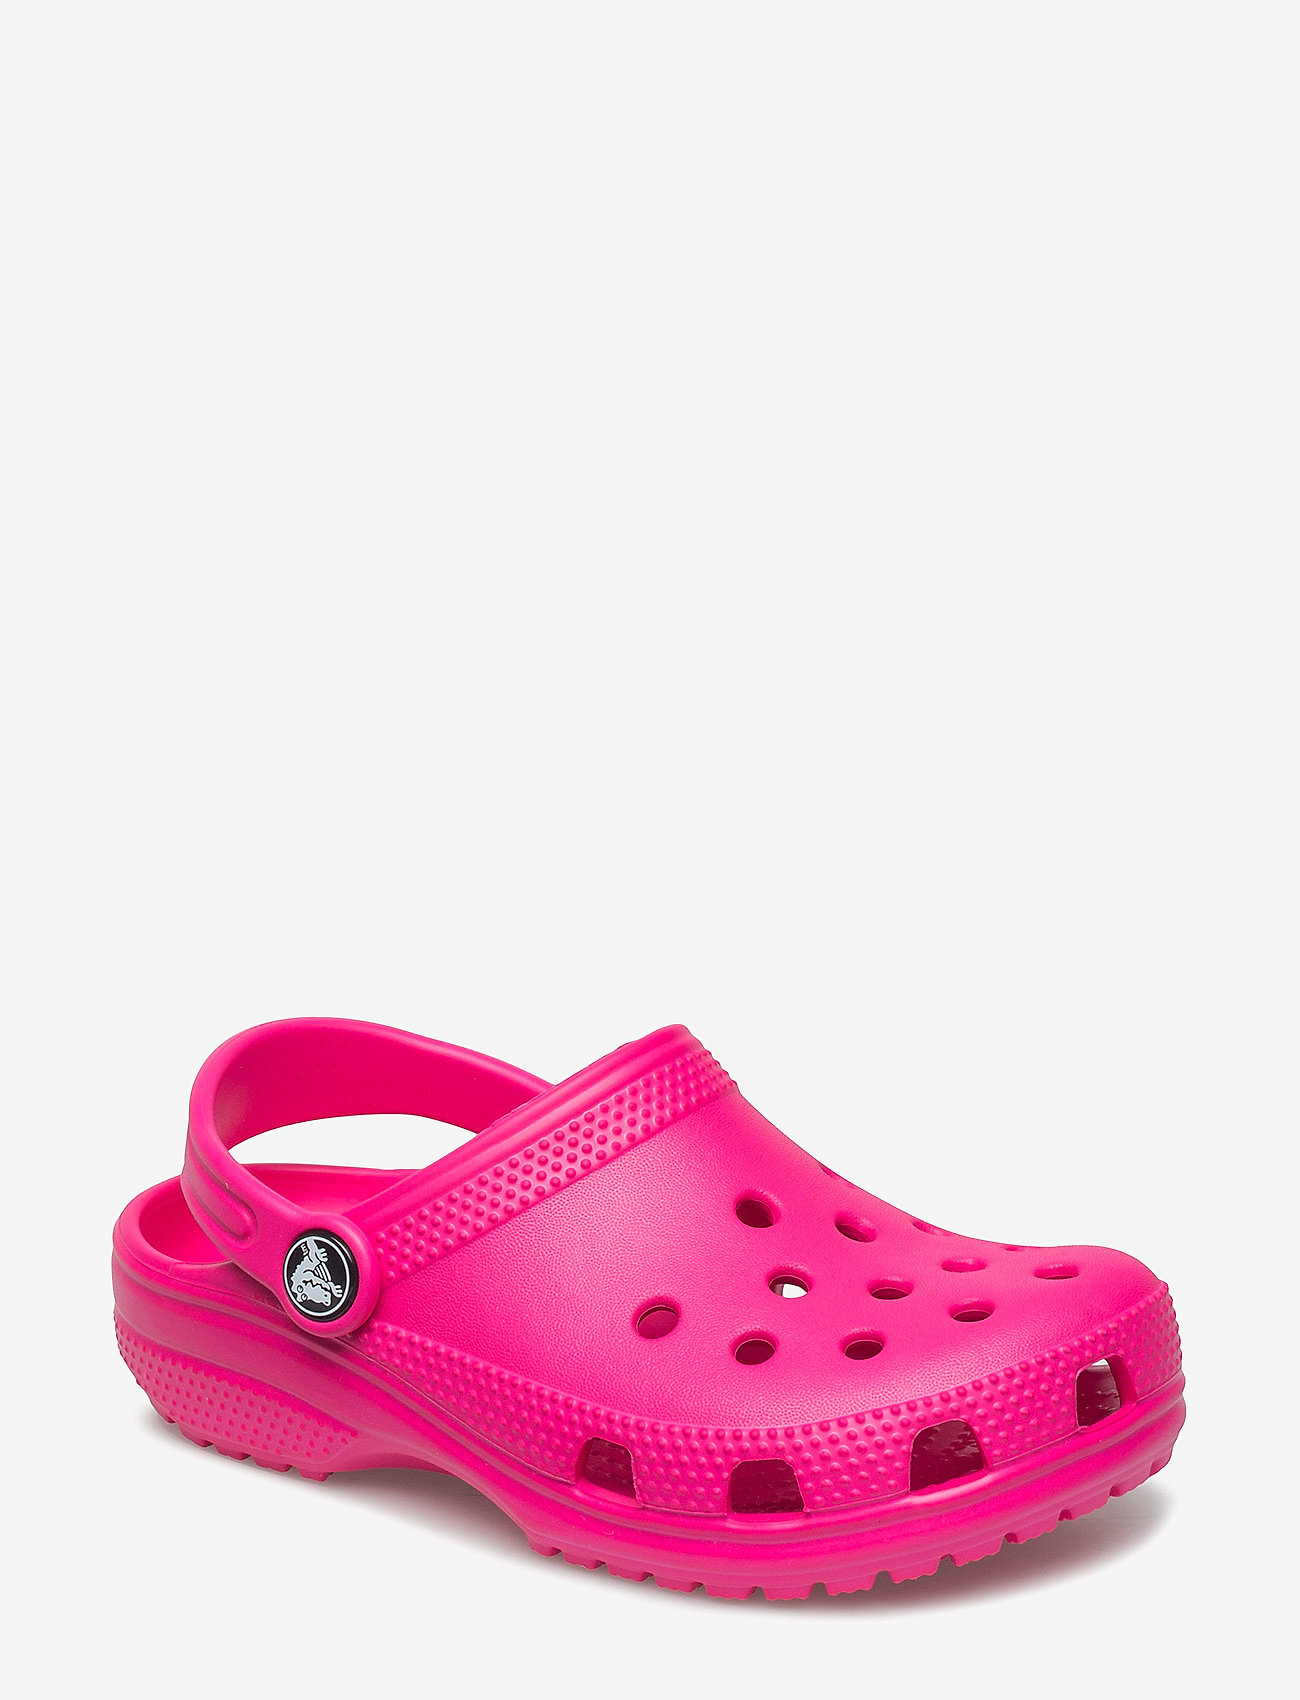 crocs classic pink